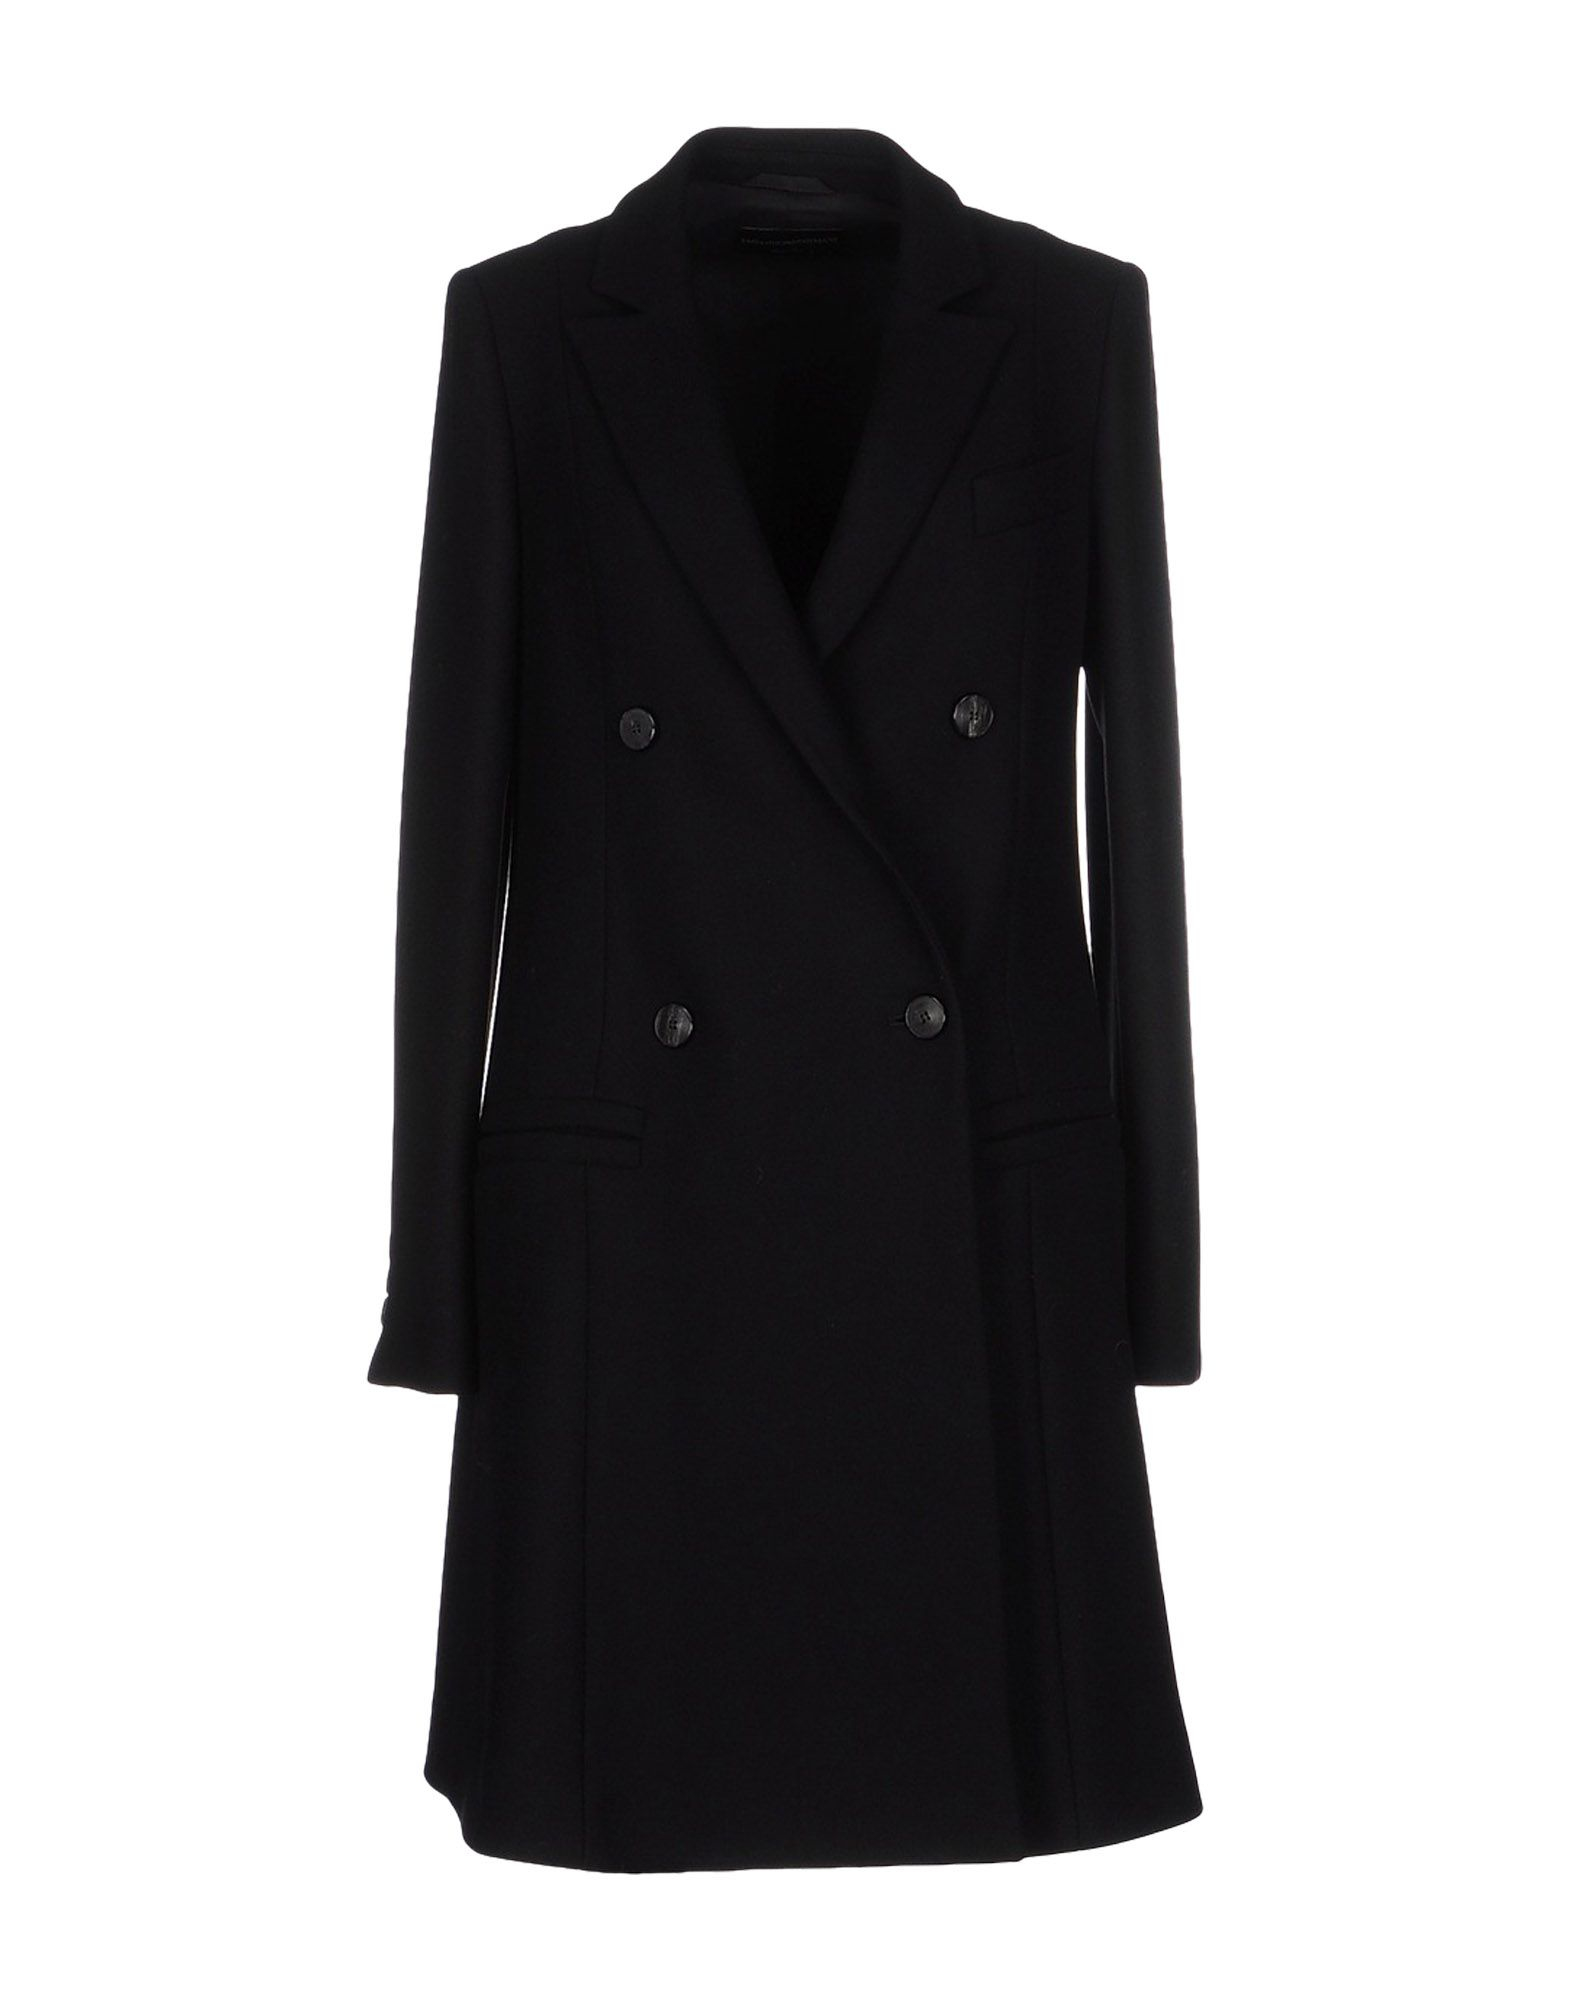 Lyst - Emporio Armani Coat in Black